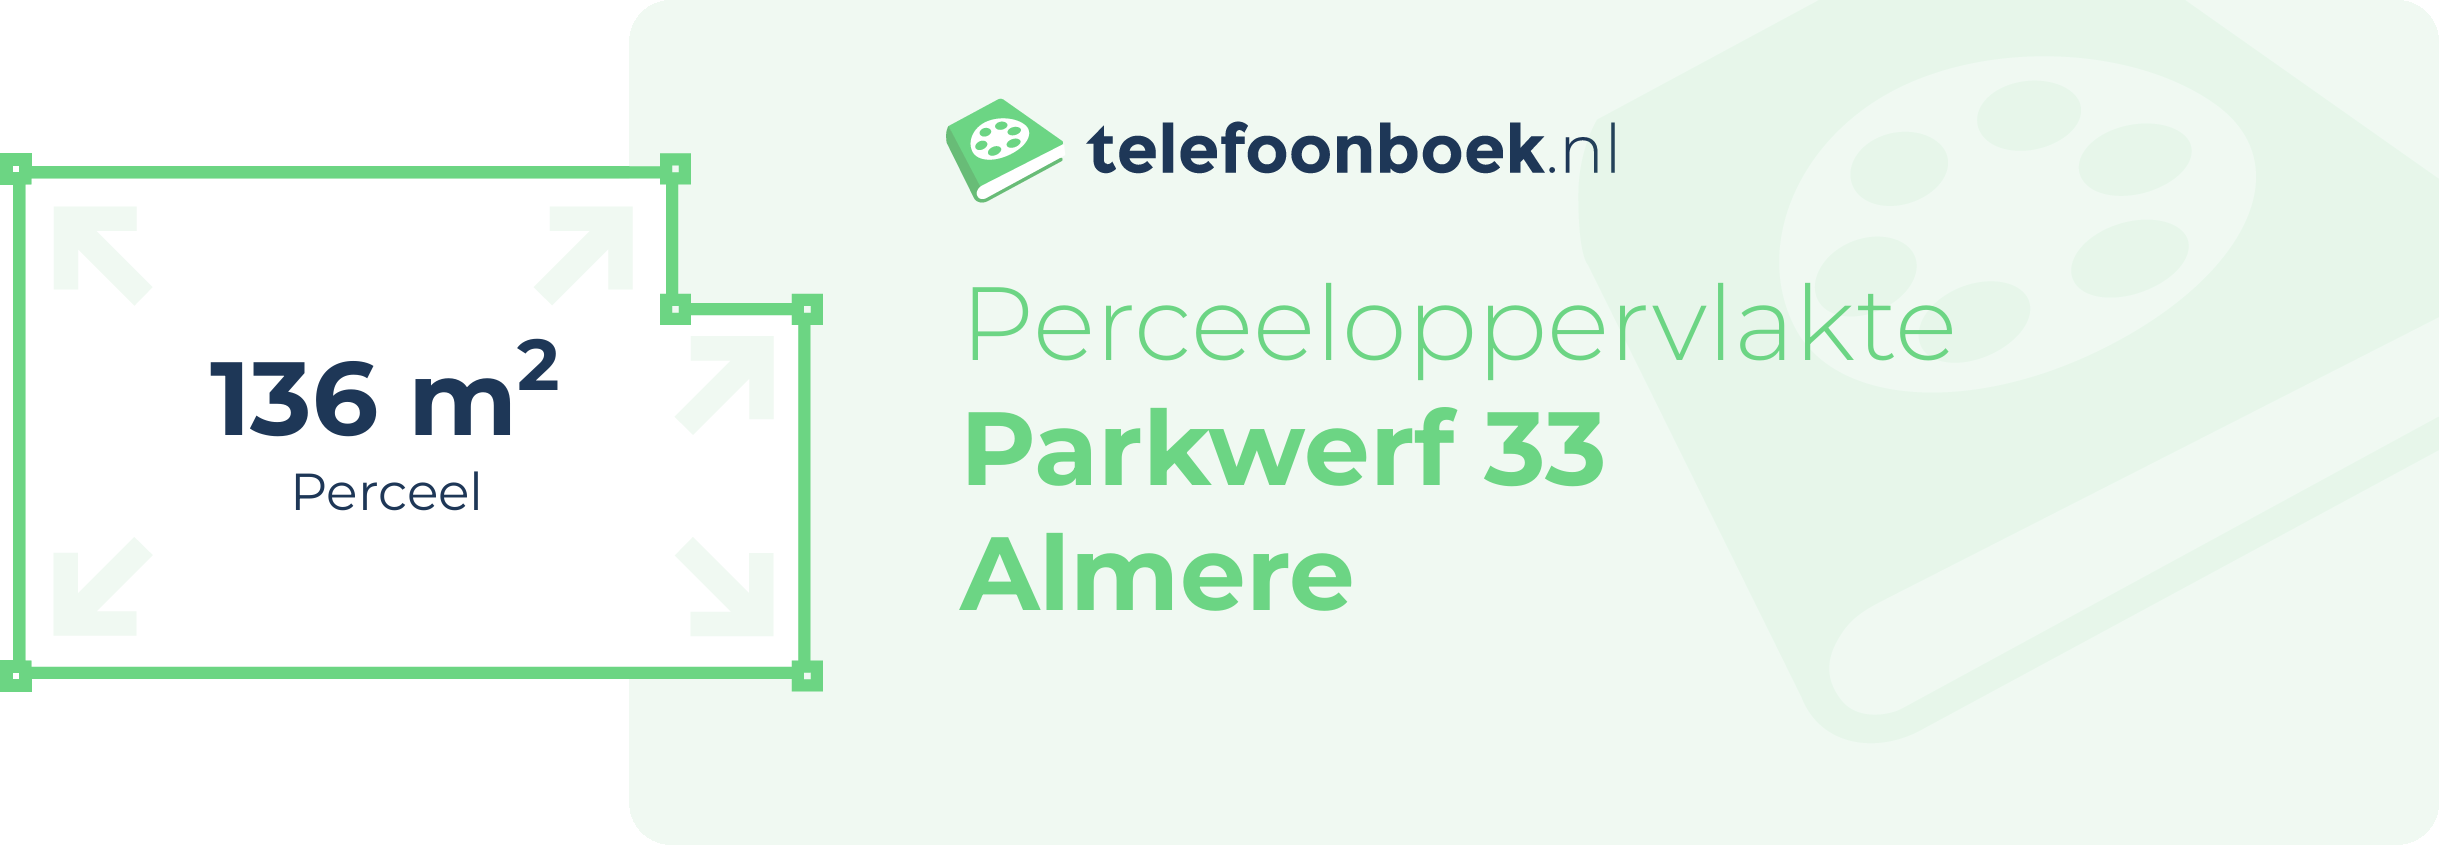 Perceeloppervlakte Parkwerf 33 Almere